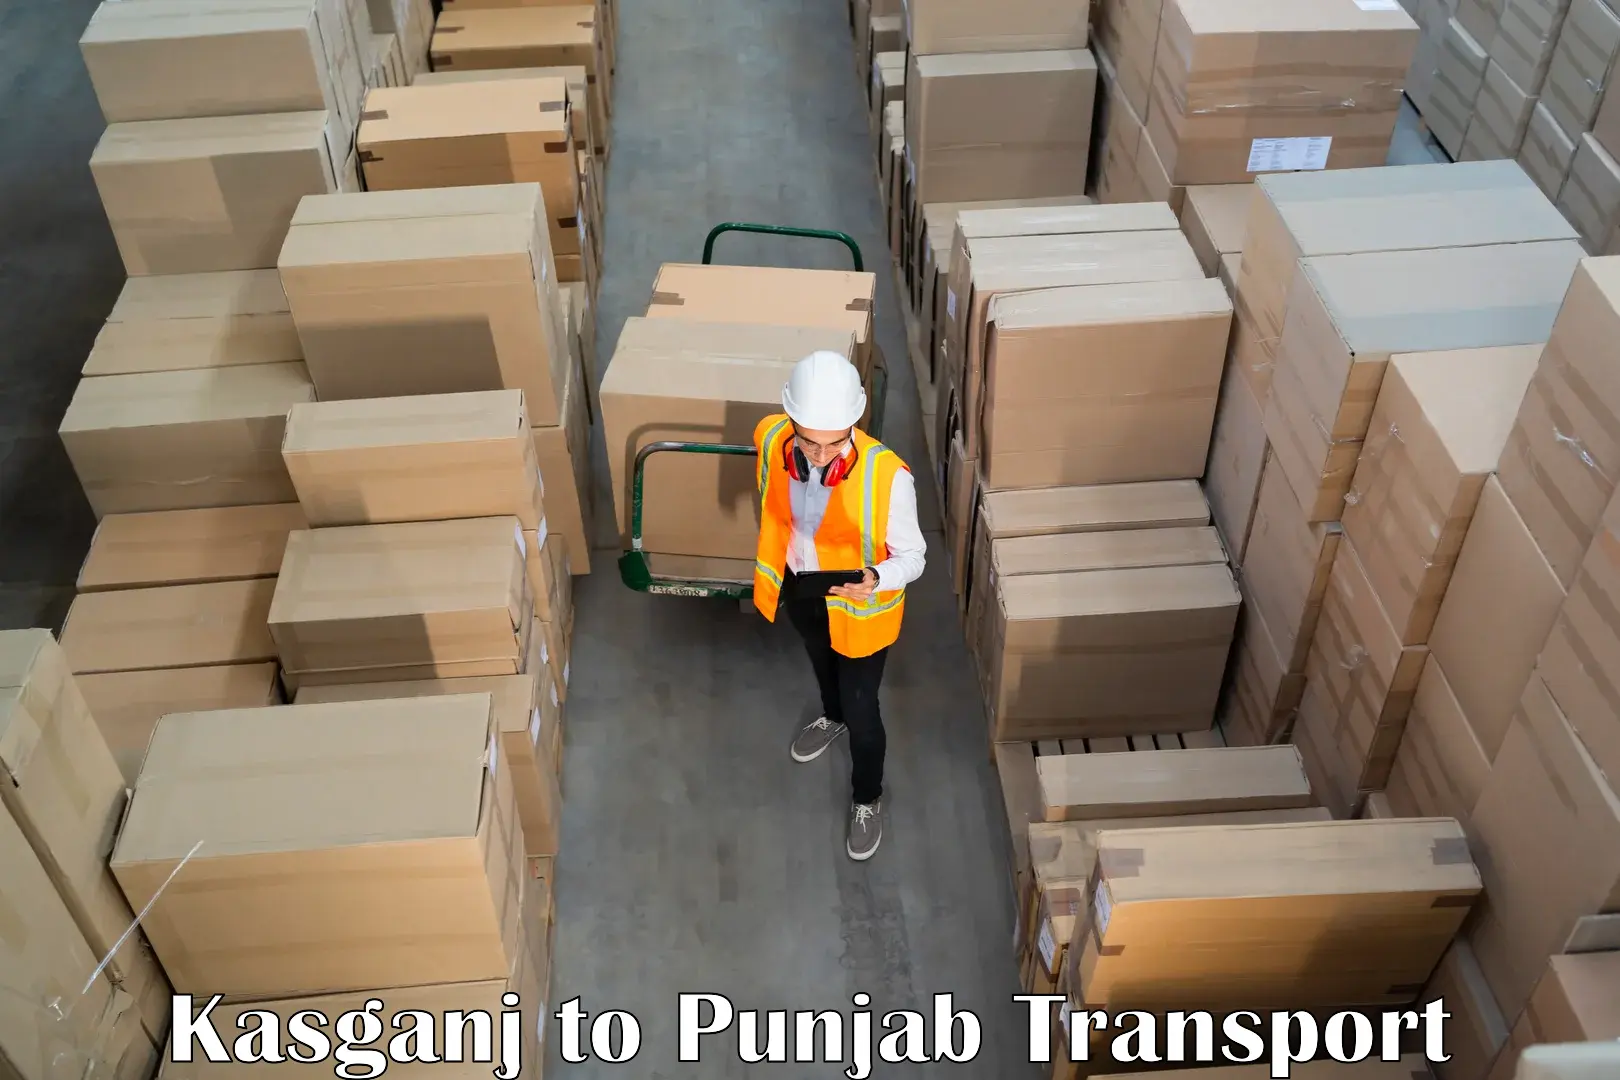 Truck transport companies in India Kasganj to Goindwal Sahib